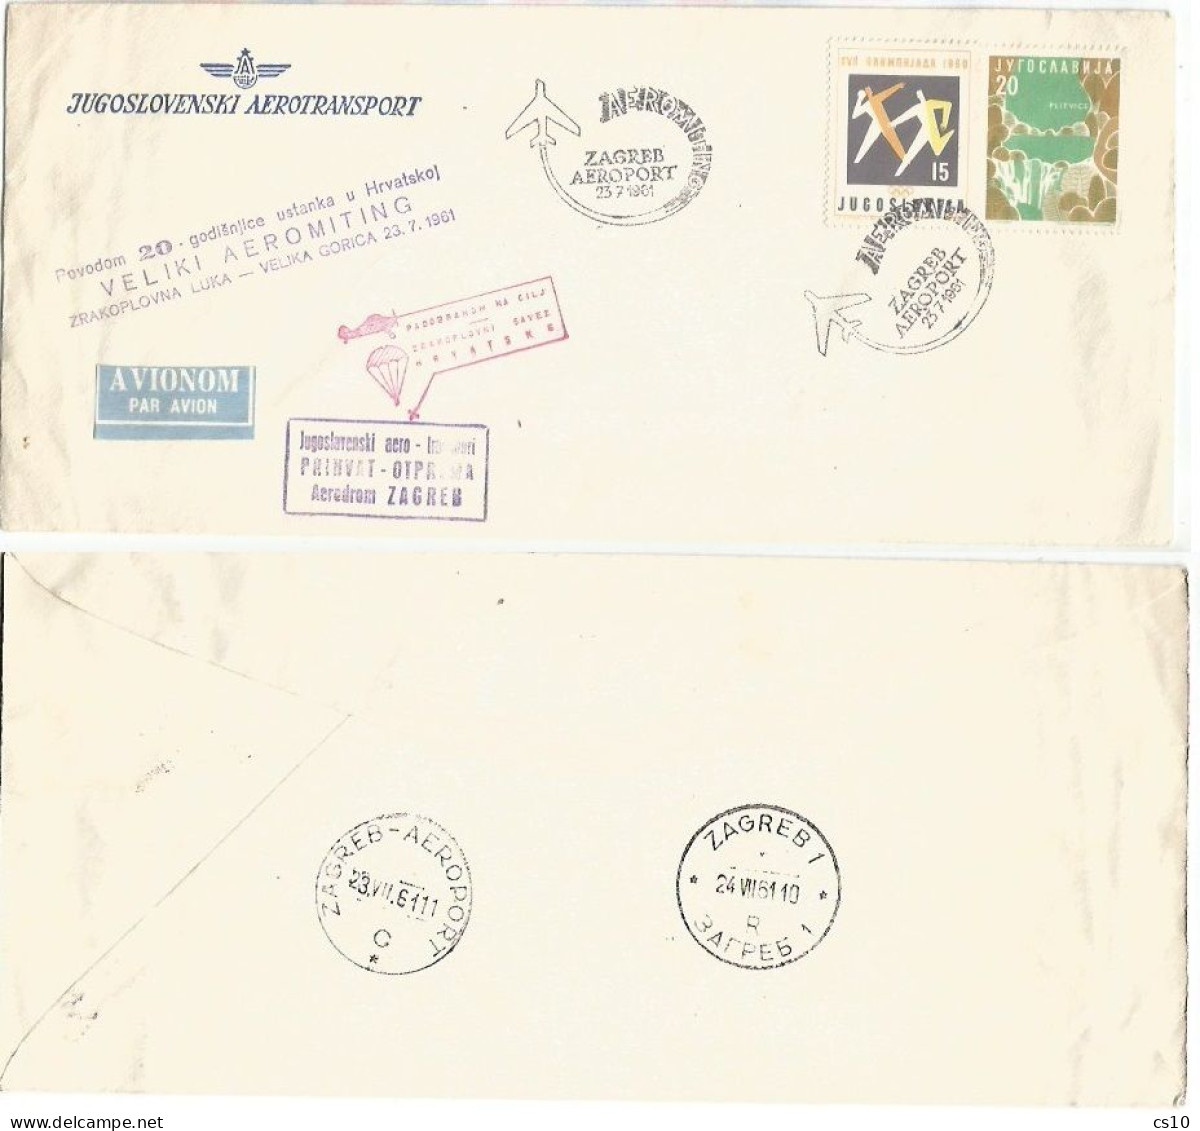 Jugoslavija Aeromeeting Zagreb 1961 Official CV 23jul1961 With 2 Stamps & 5 Special Cachets + 2 PMK Backside - Airmail